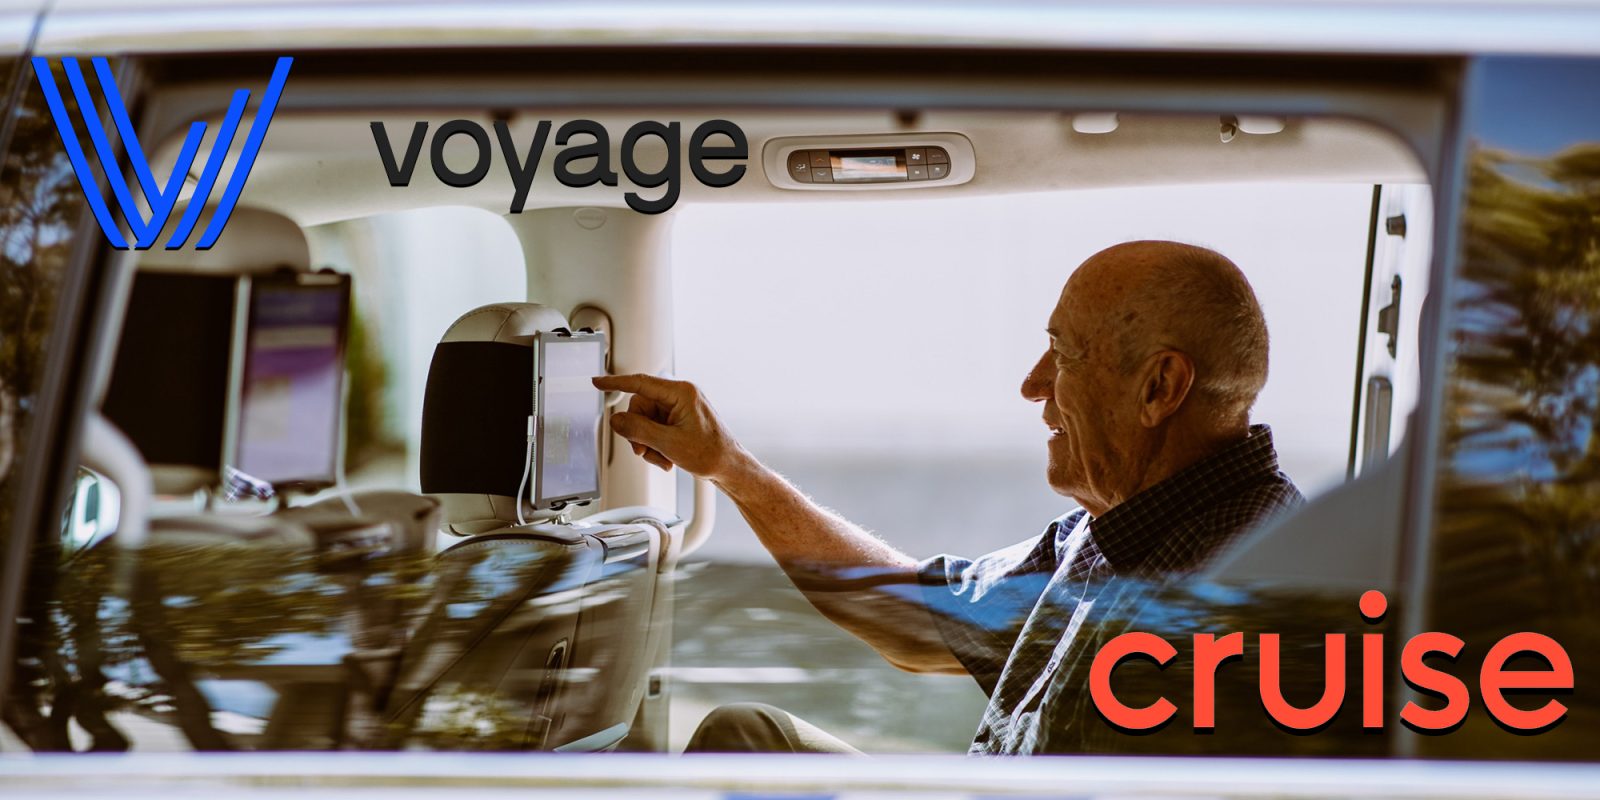 Voyage Cruise self-driving